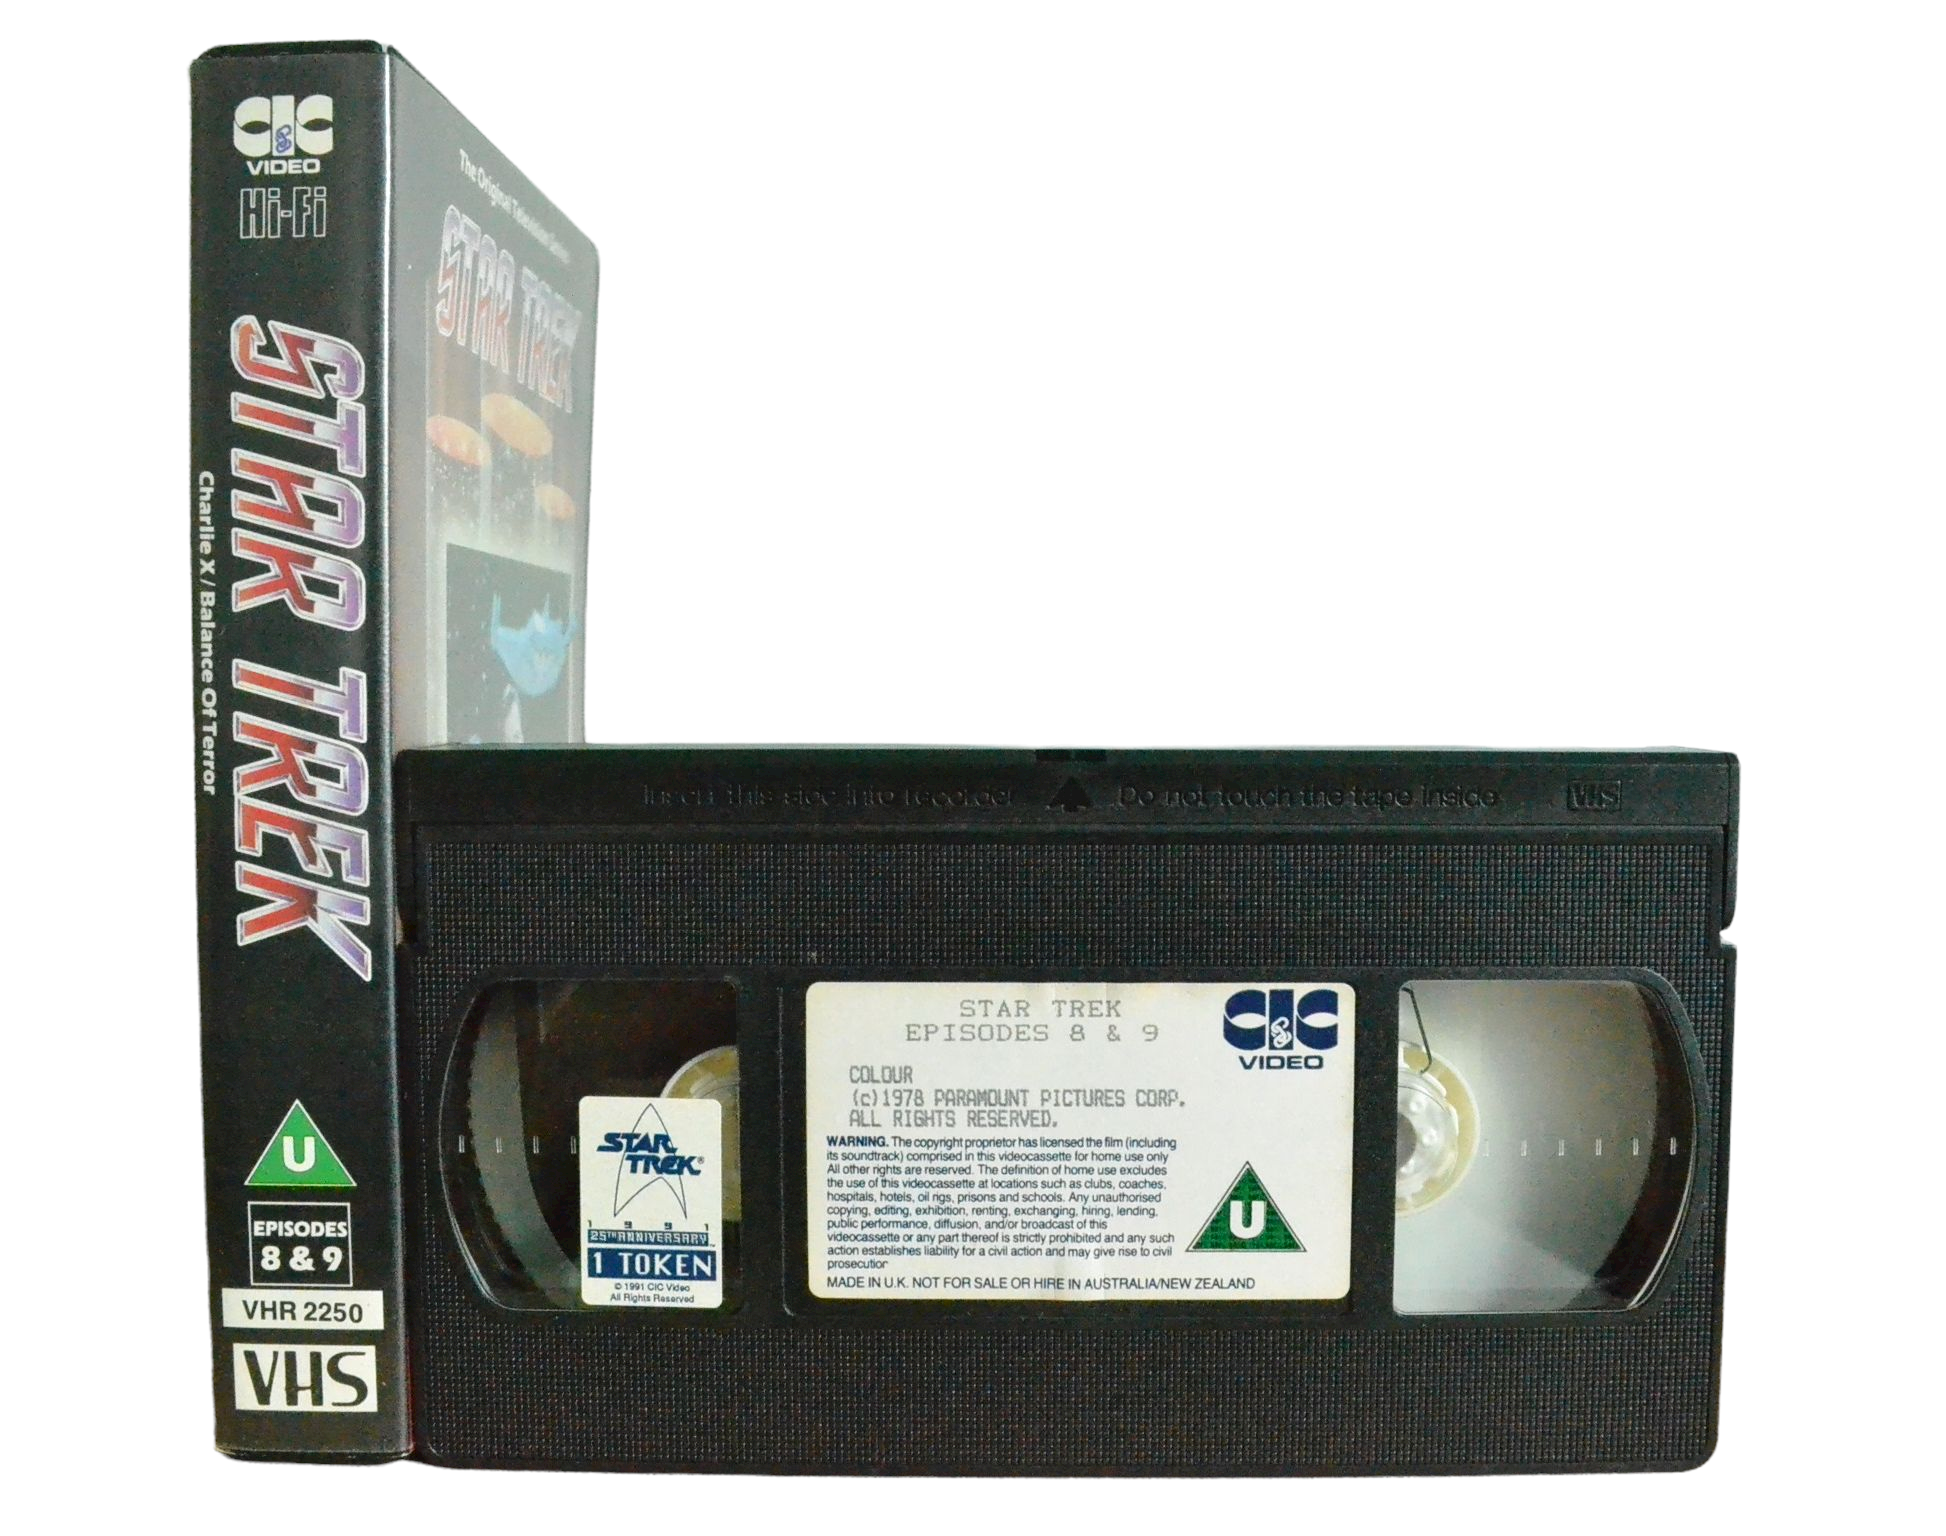 Star Trek: Charlie X & Balance Of Terror - William Shartner - CIC Video - Vintage - Pal VHS-